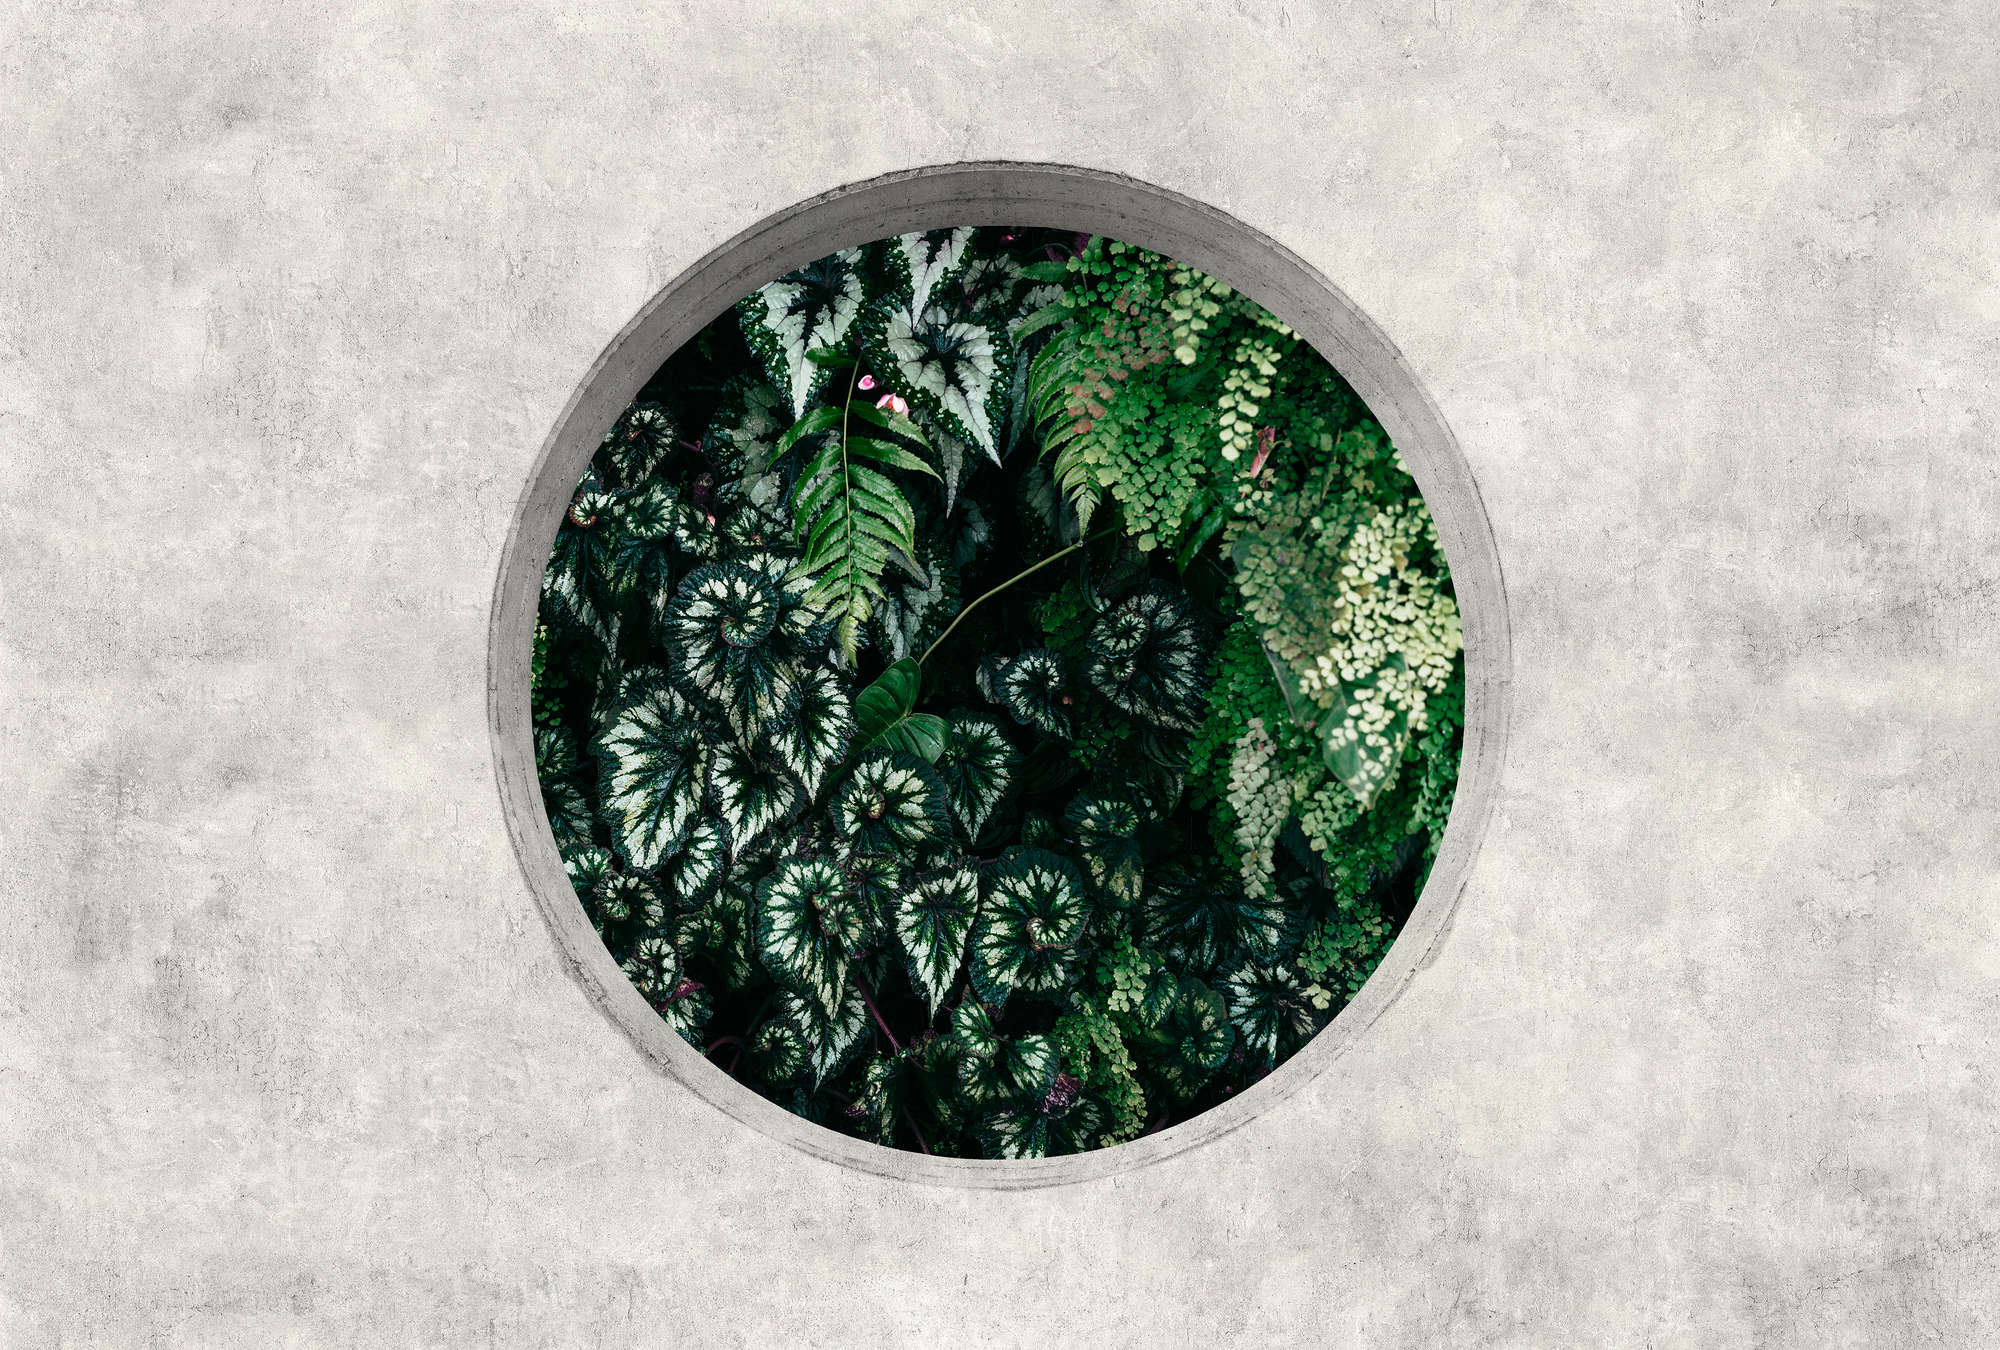             Deep Green 1 - Foto papel pintado ventana redonda con plantas de la selva
        